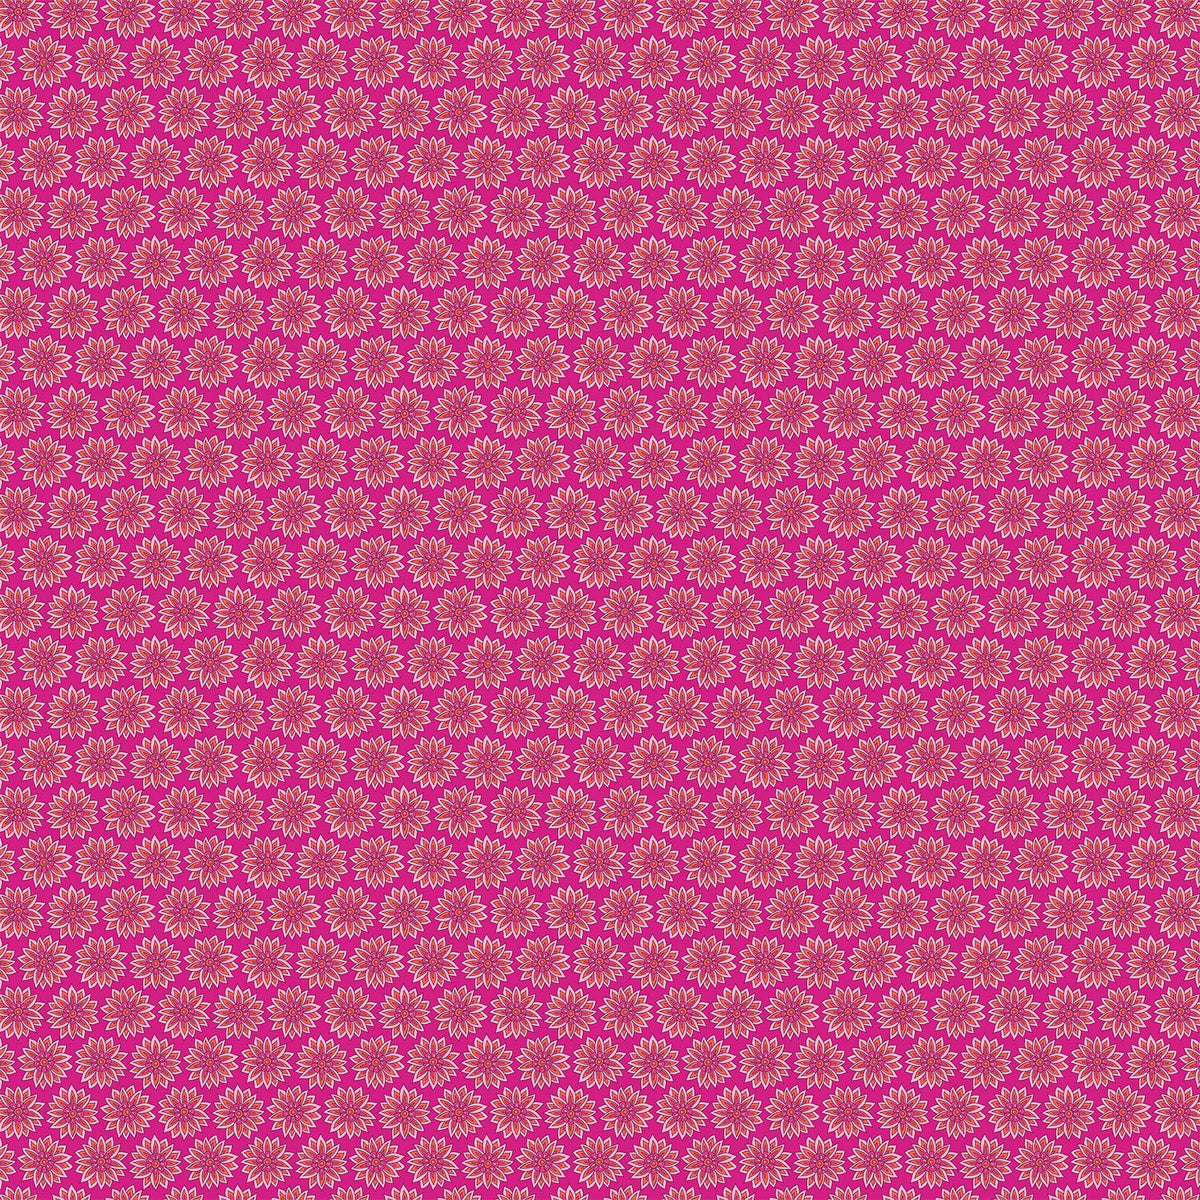 Happiness Quilt Fabric - Stellar in Fuchsia Pink - 90597-28